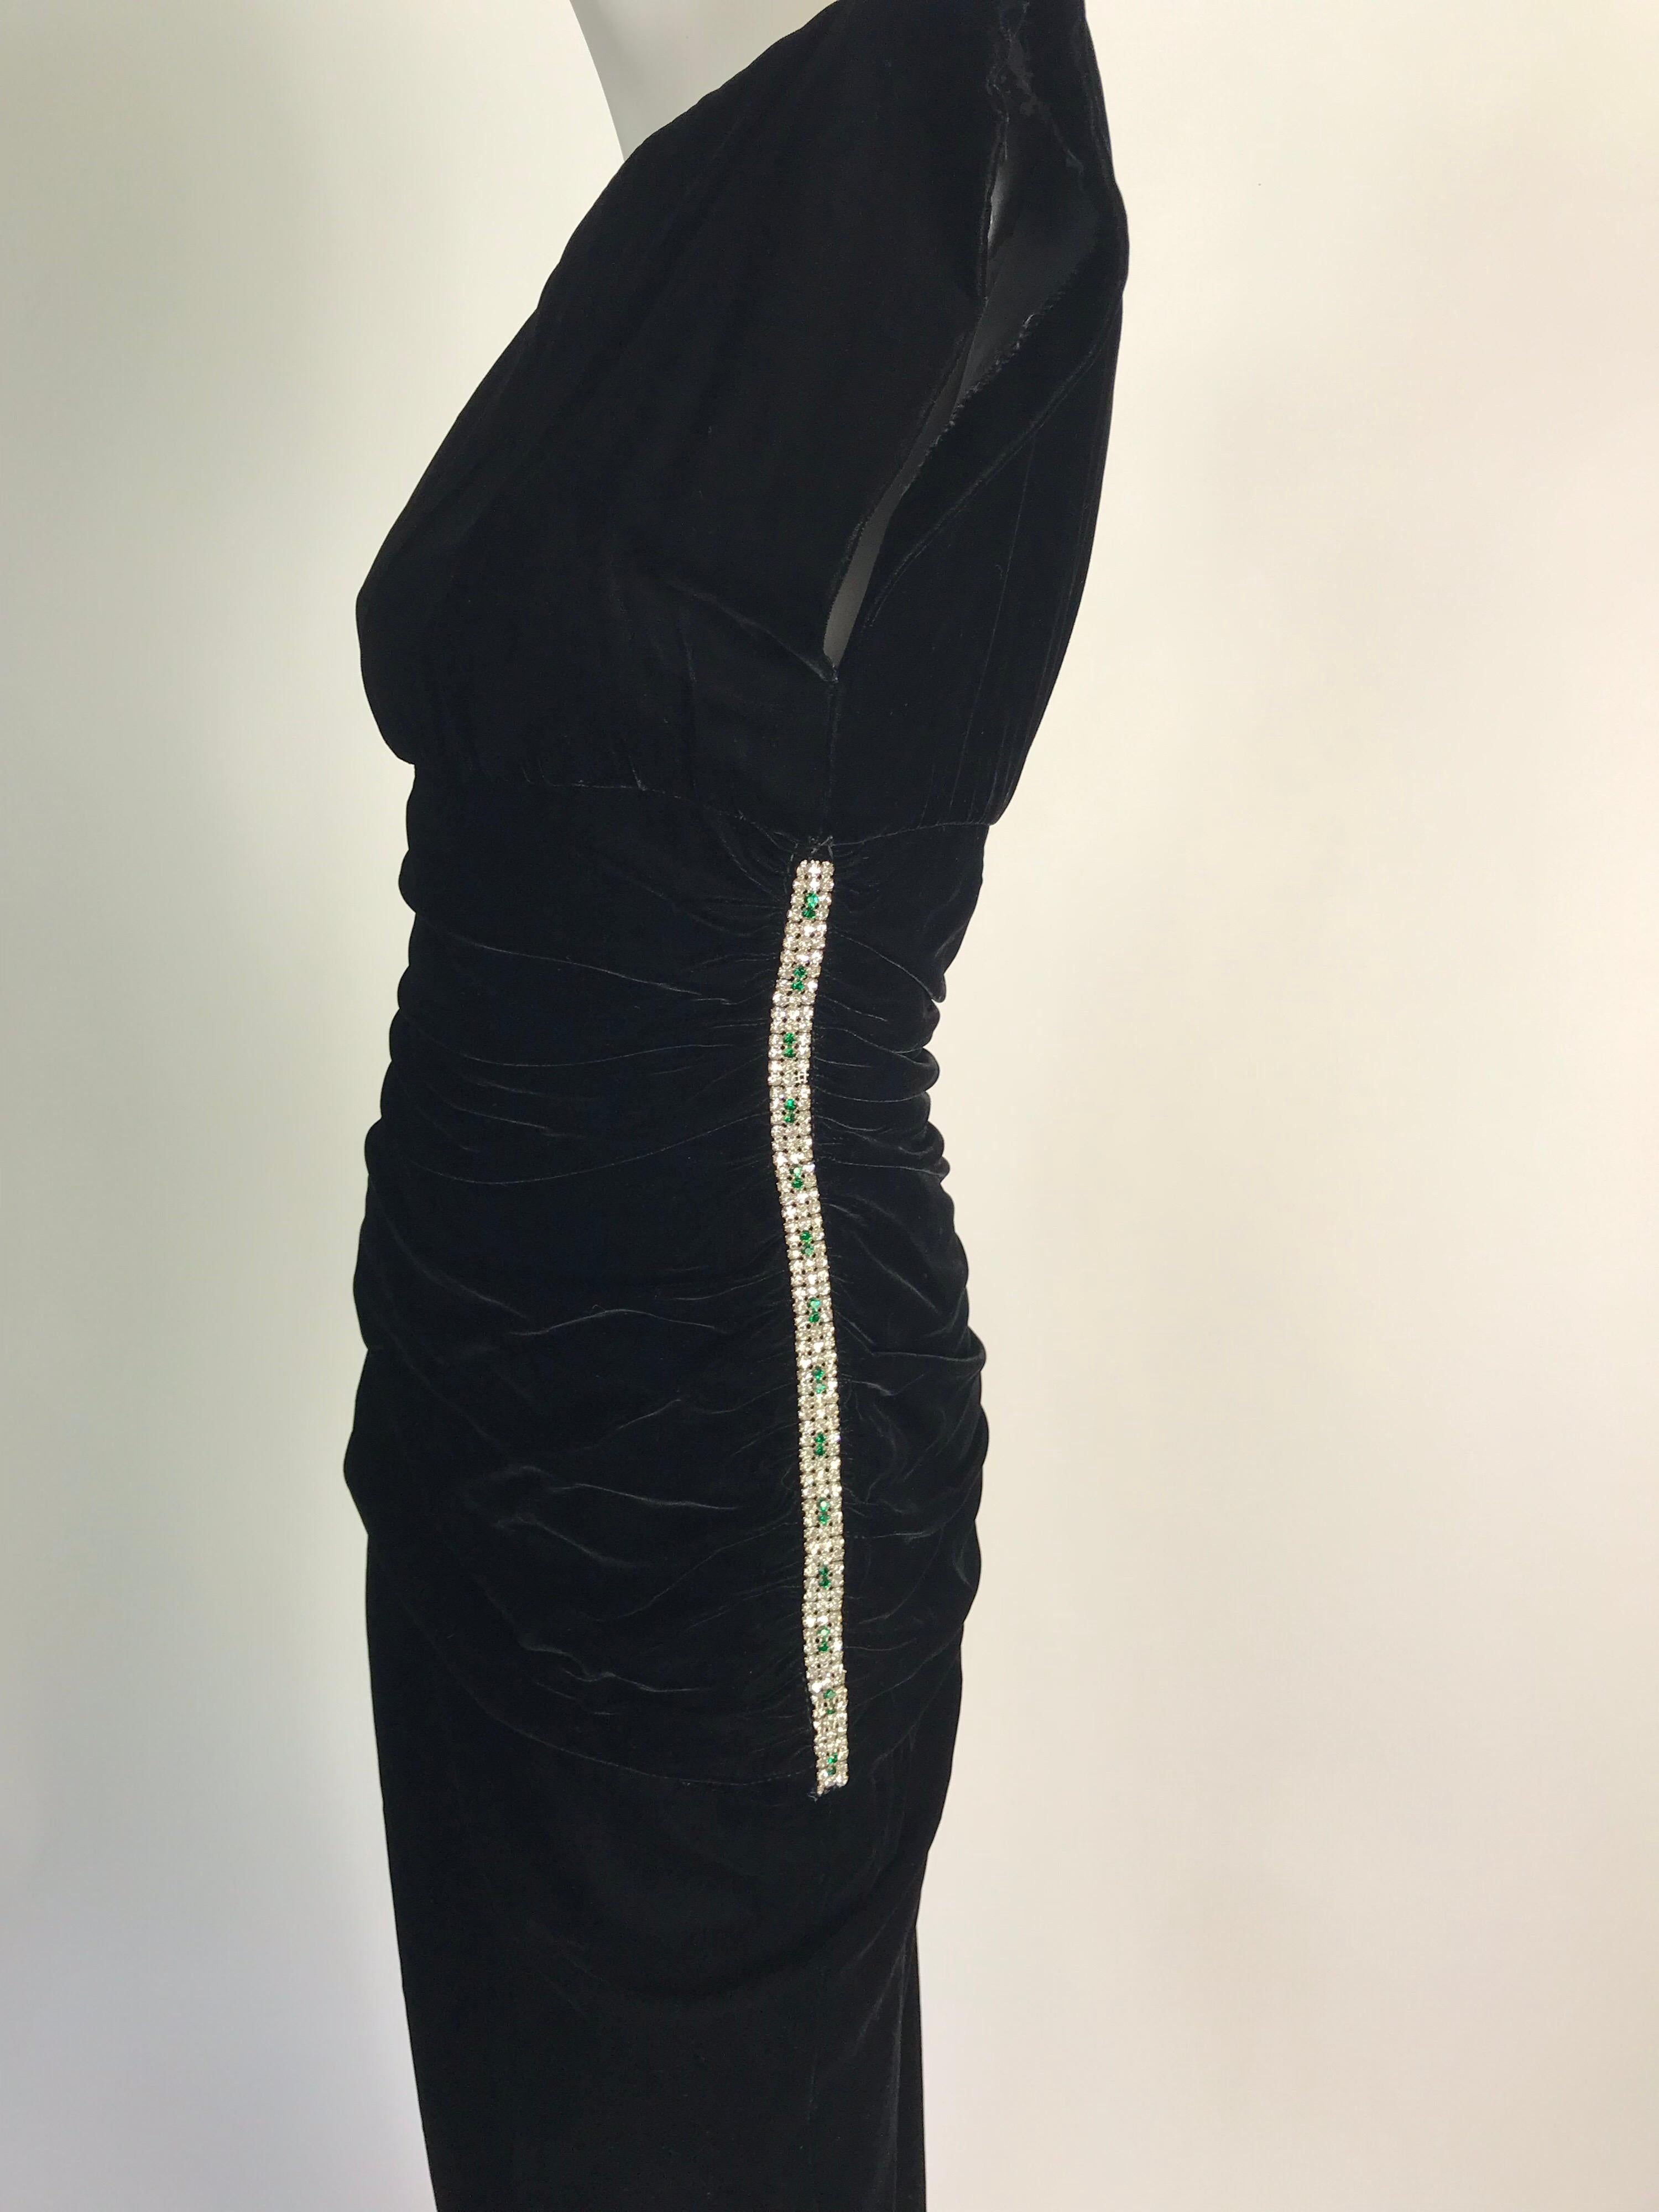 Women's Oscar de la Renta Velvet Cocktail Dress with Rhinestone trim on sides